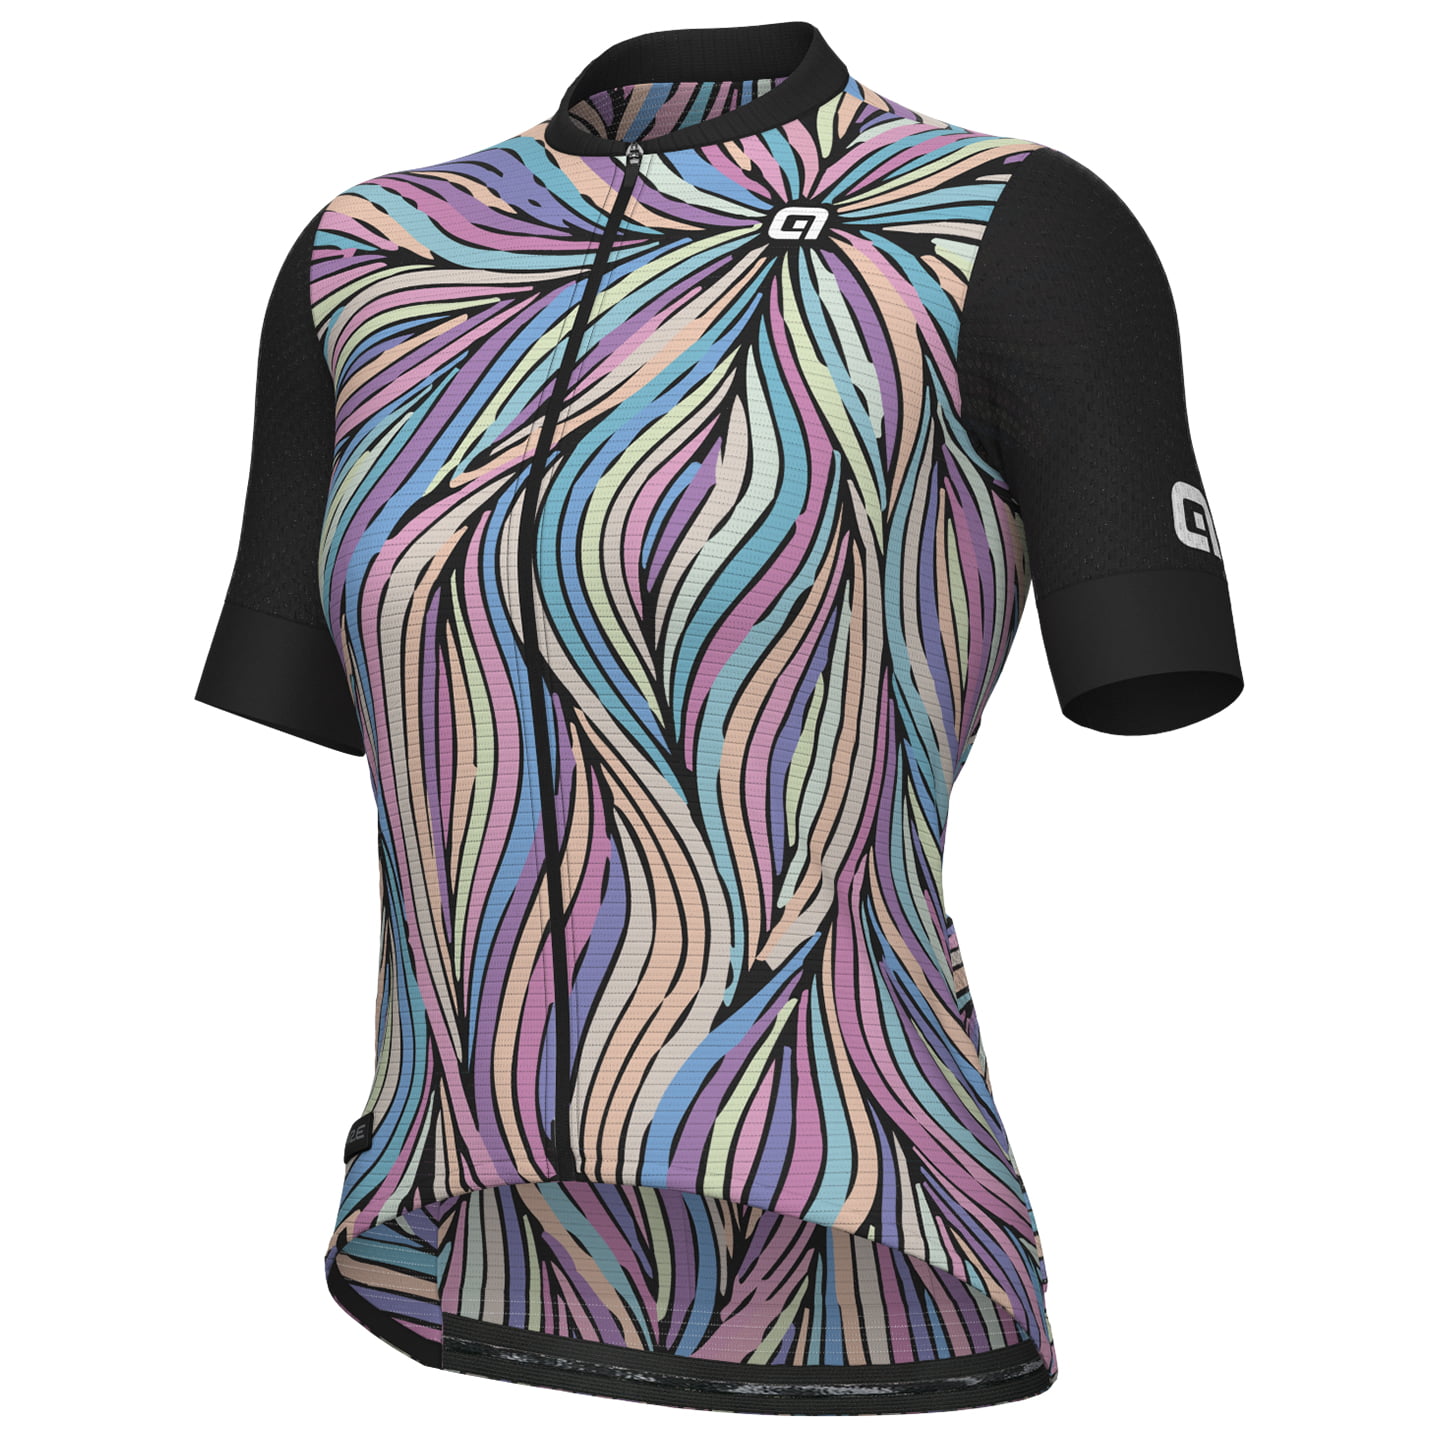 ALE Art Women’s Short Sleeve Jersey, size S, Cycling jersey, Cycle gear